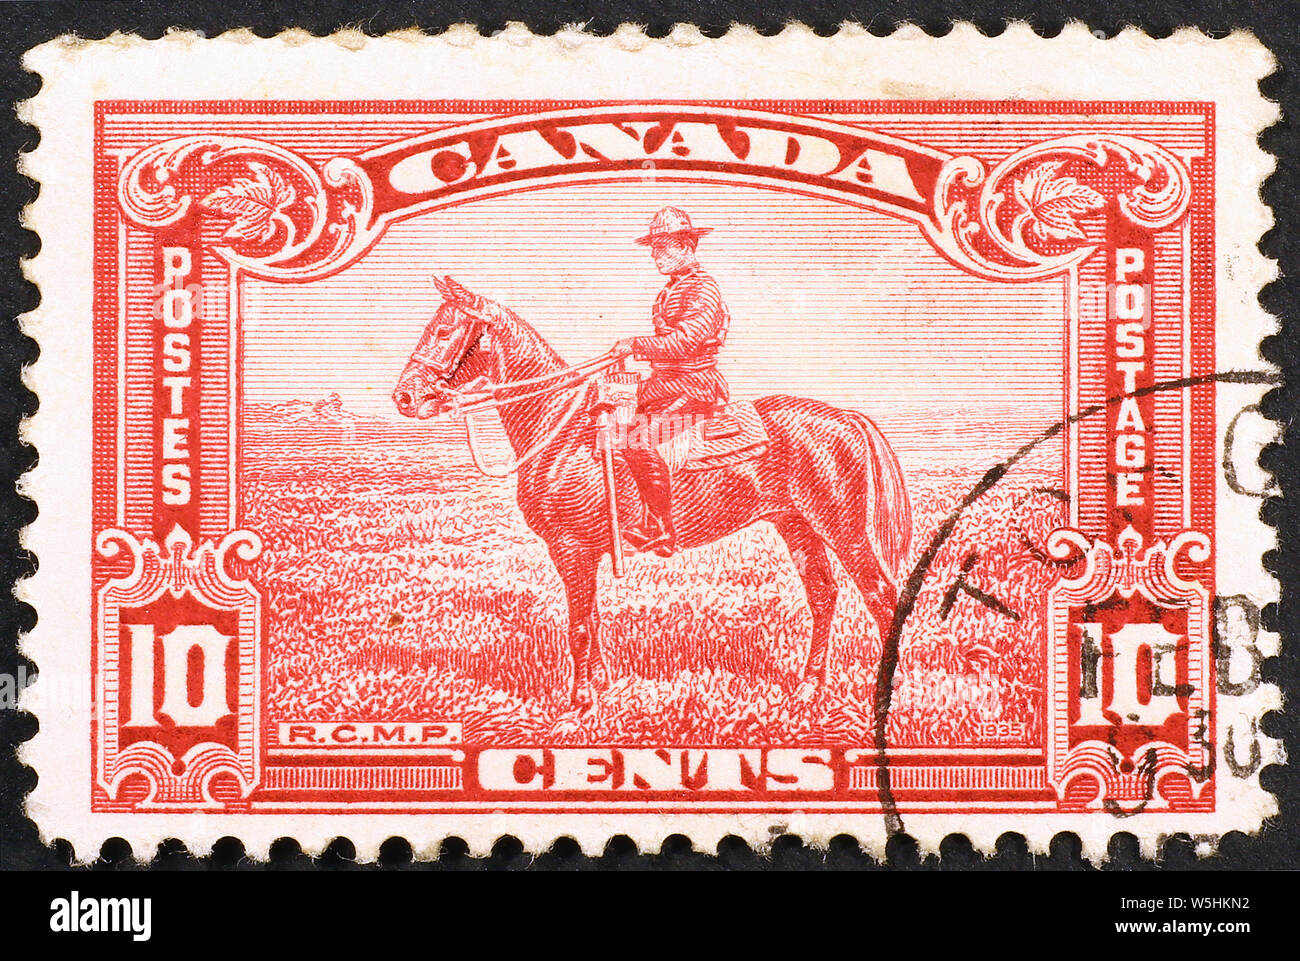 Royal canadian mounted policeman on vintage stamp Stock Photo